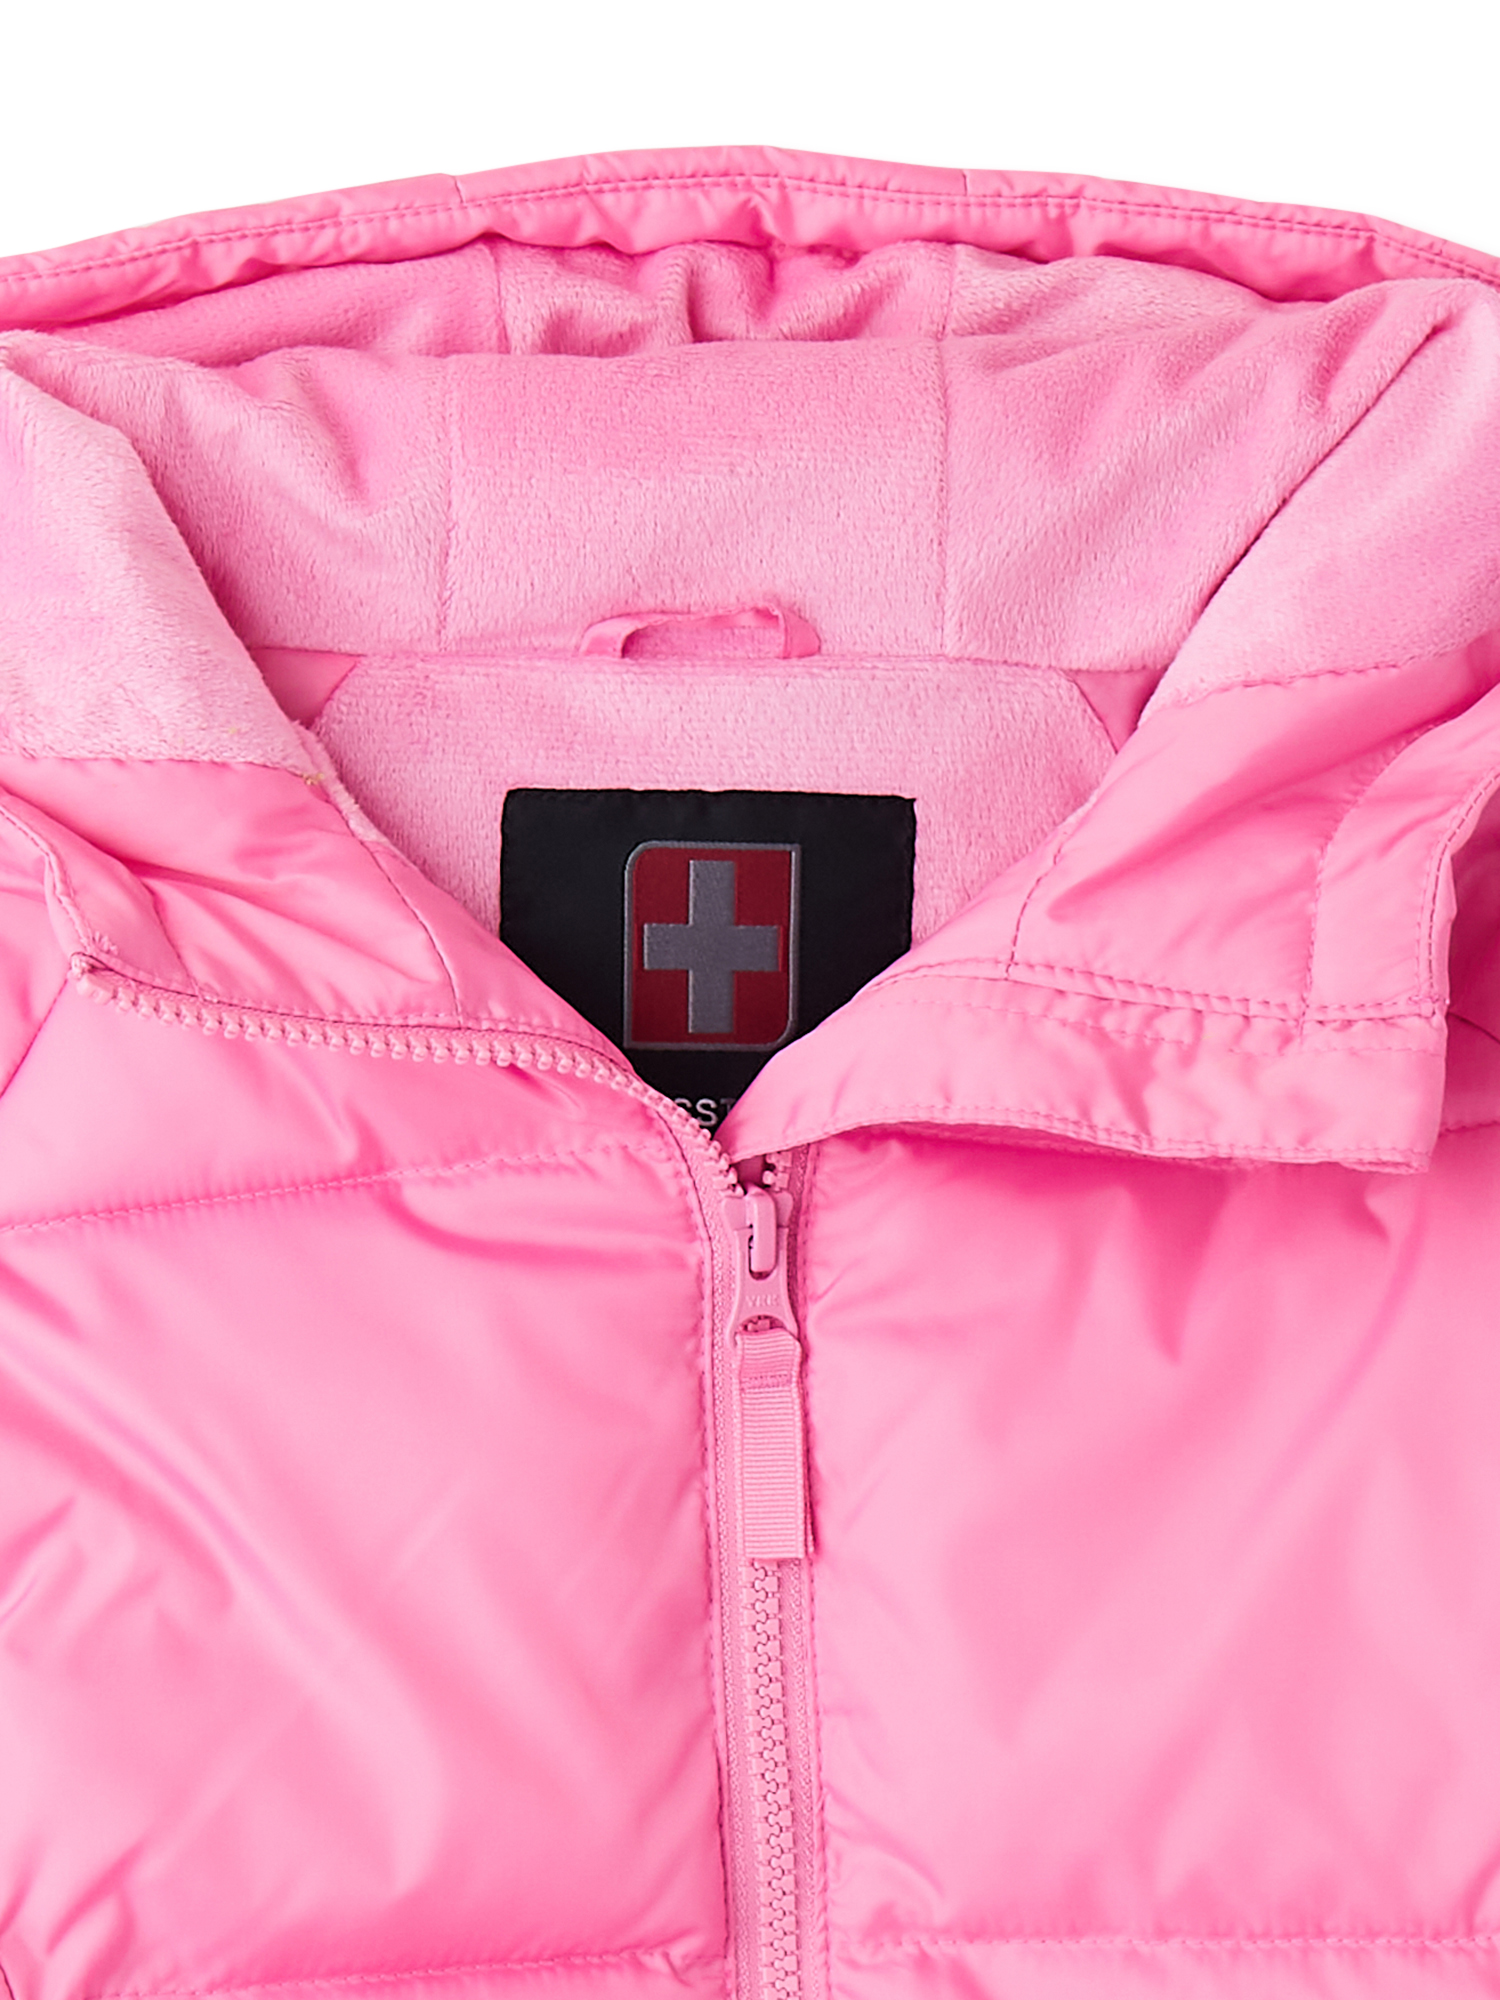 Swiss Tech Girls Winter Puffer Jacket with Hood, Sizes 4-18 & Plus - image 3 of 4